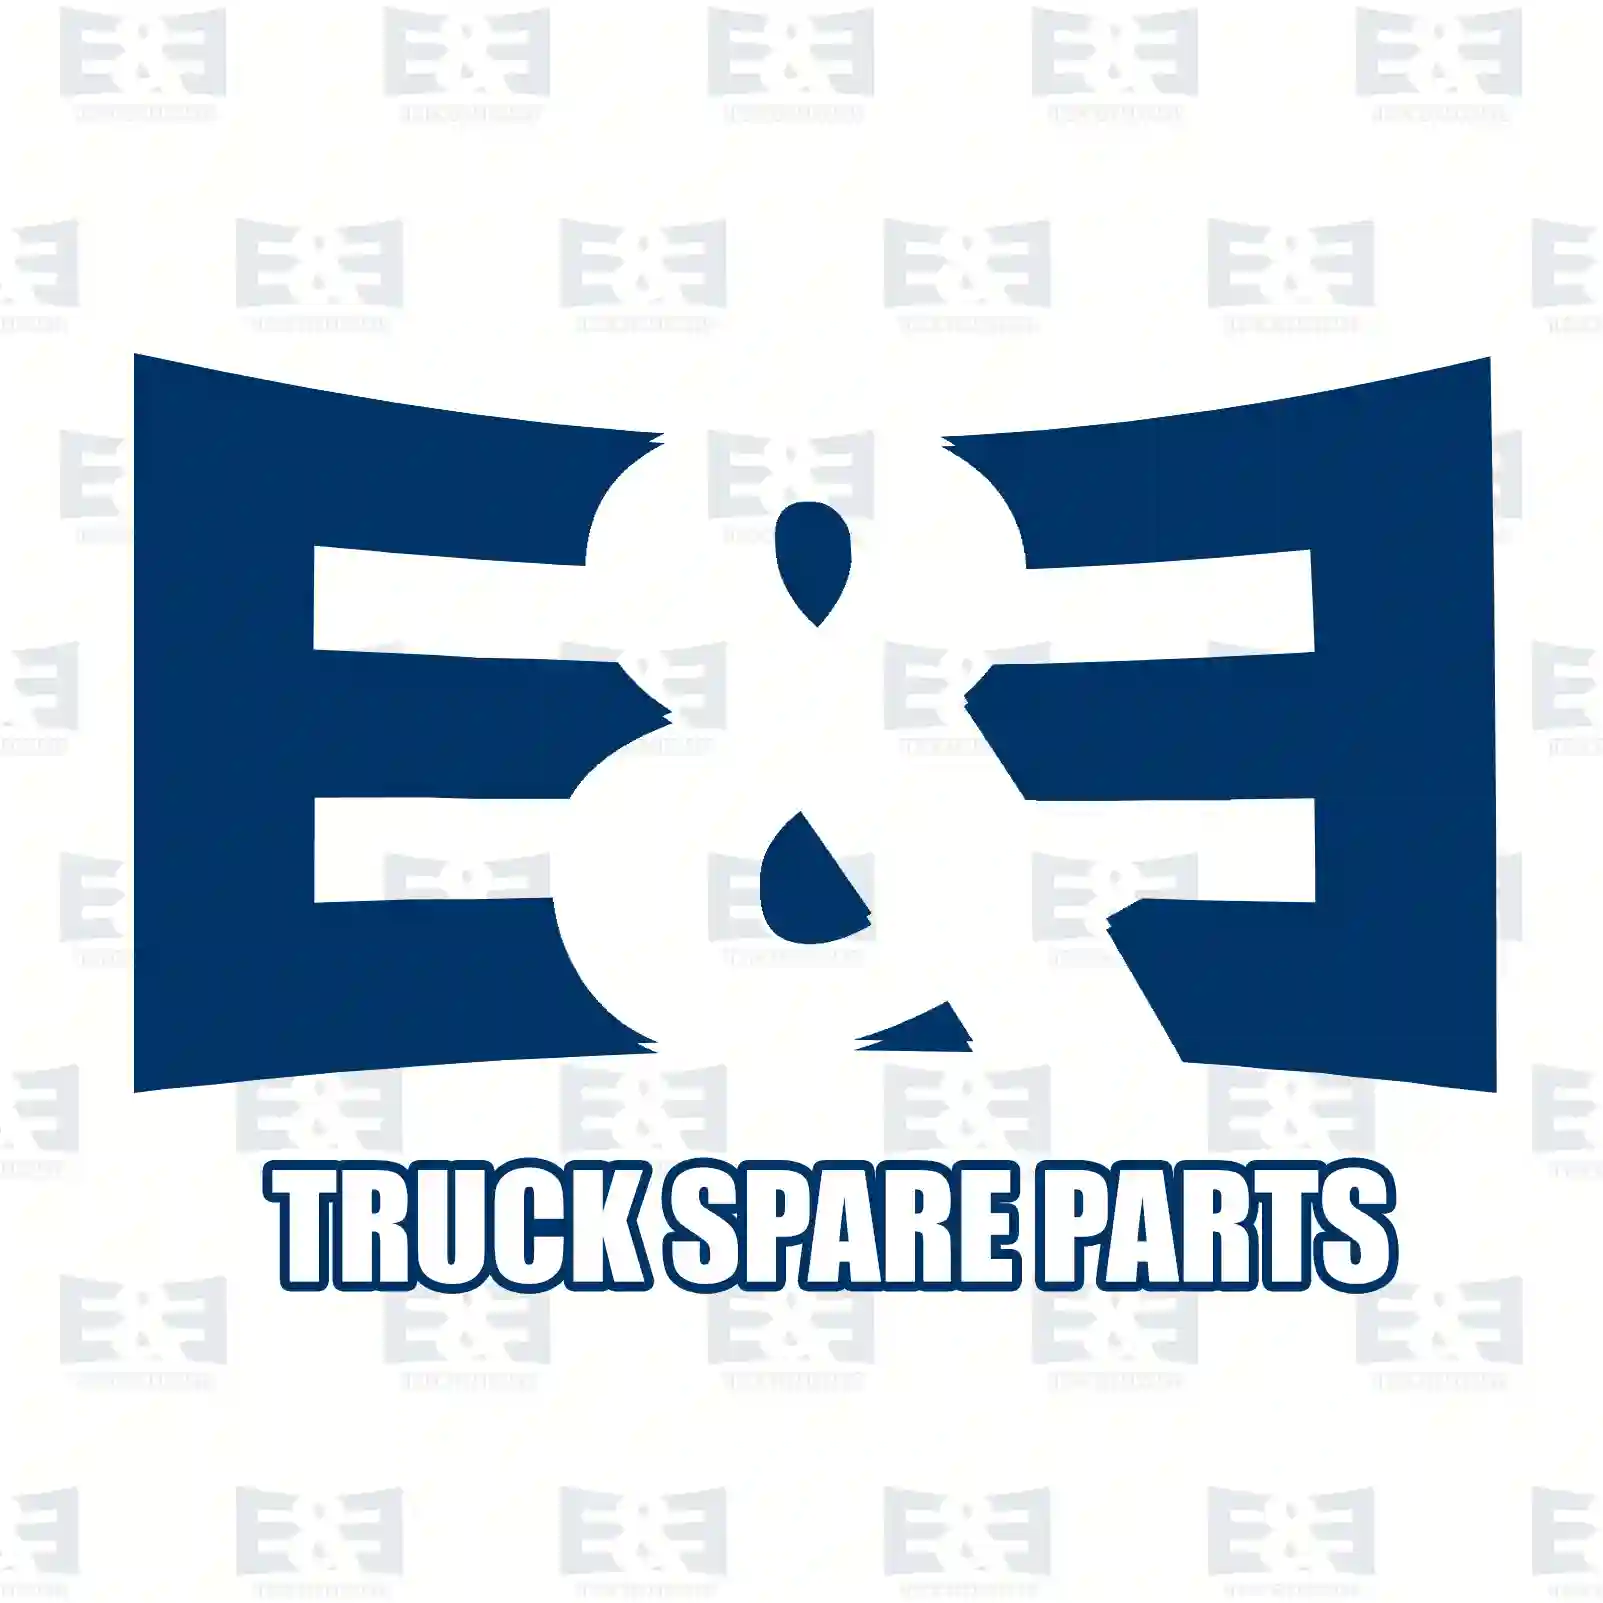 Repair kit, Sensor, 2E2279480, 7422117441, 21068284, 21068285, 21986636, 22117441 ||  2E2279480 E&E Truck Spare Parts | Truck Spare Parts, Auotomotive Spare Parts Repair kit, Sensor, 2E2279480, 7422117441, 21068284, 21068285, 21986636, 22117441 ||  2E2279480 E&E Truck Spare Parts | Truck Spare Parts, Auotomotive Spare Parts